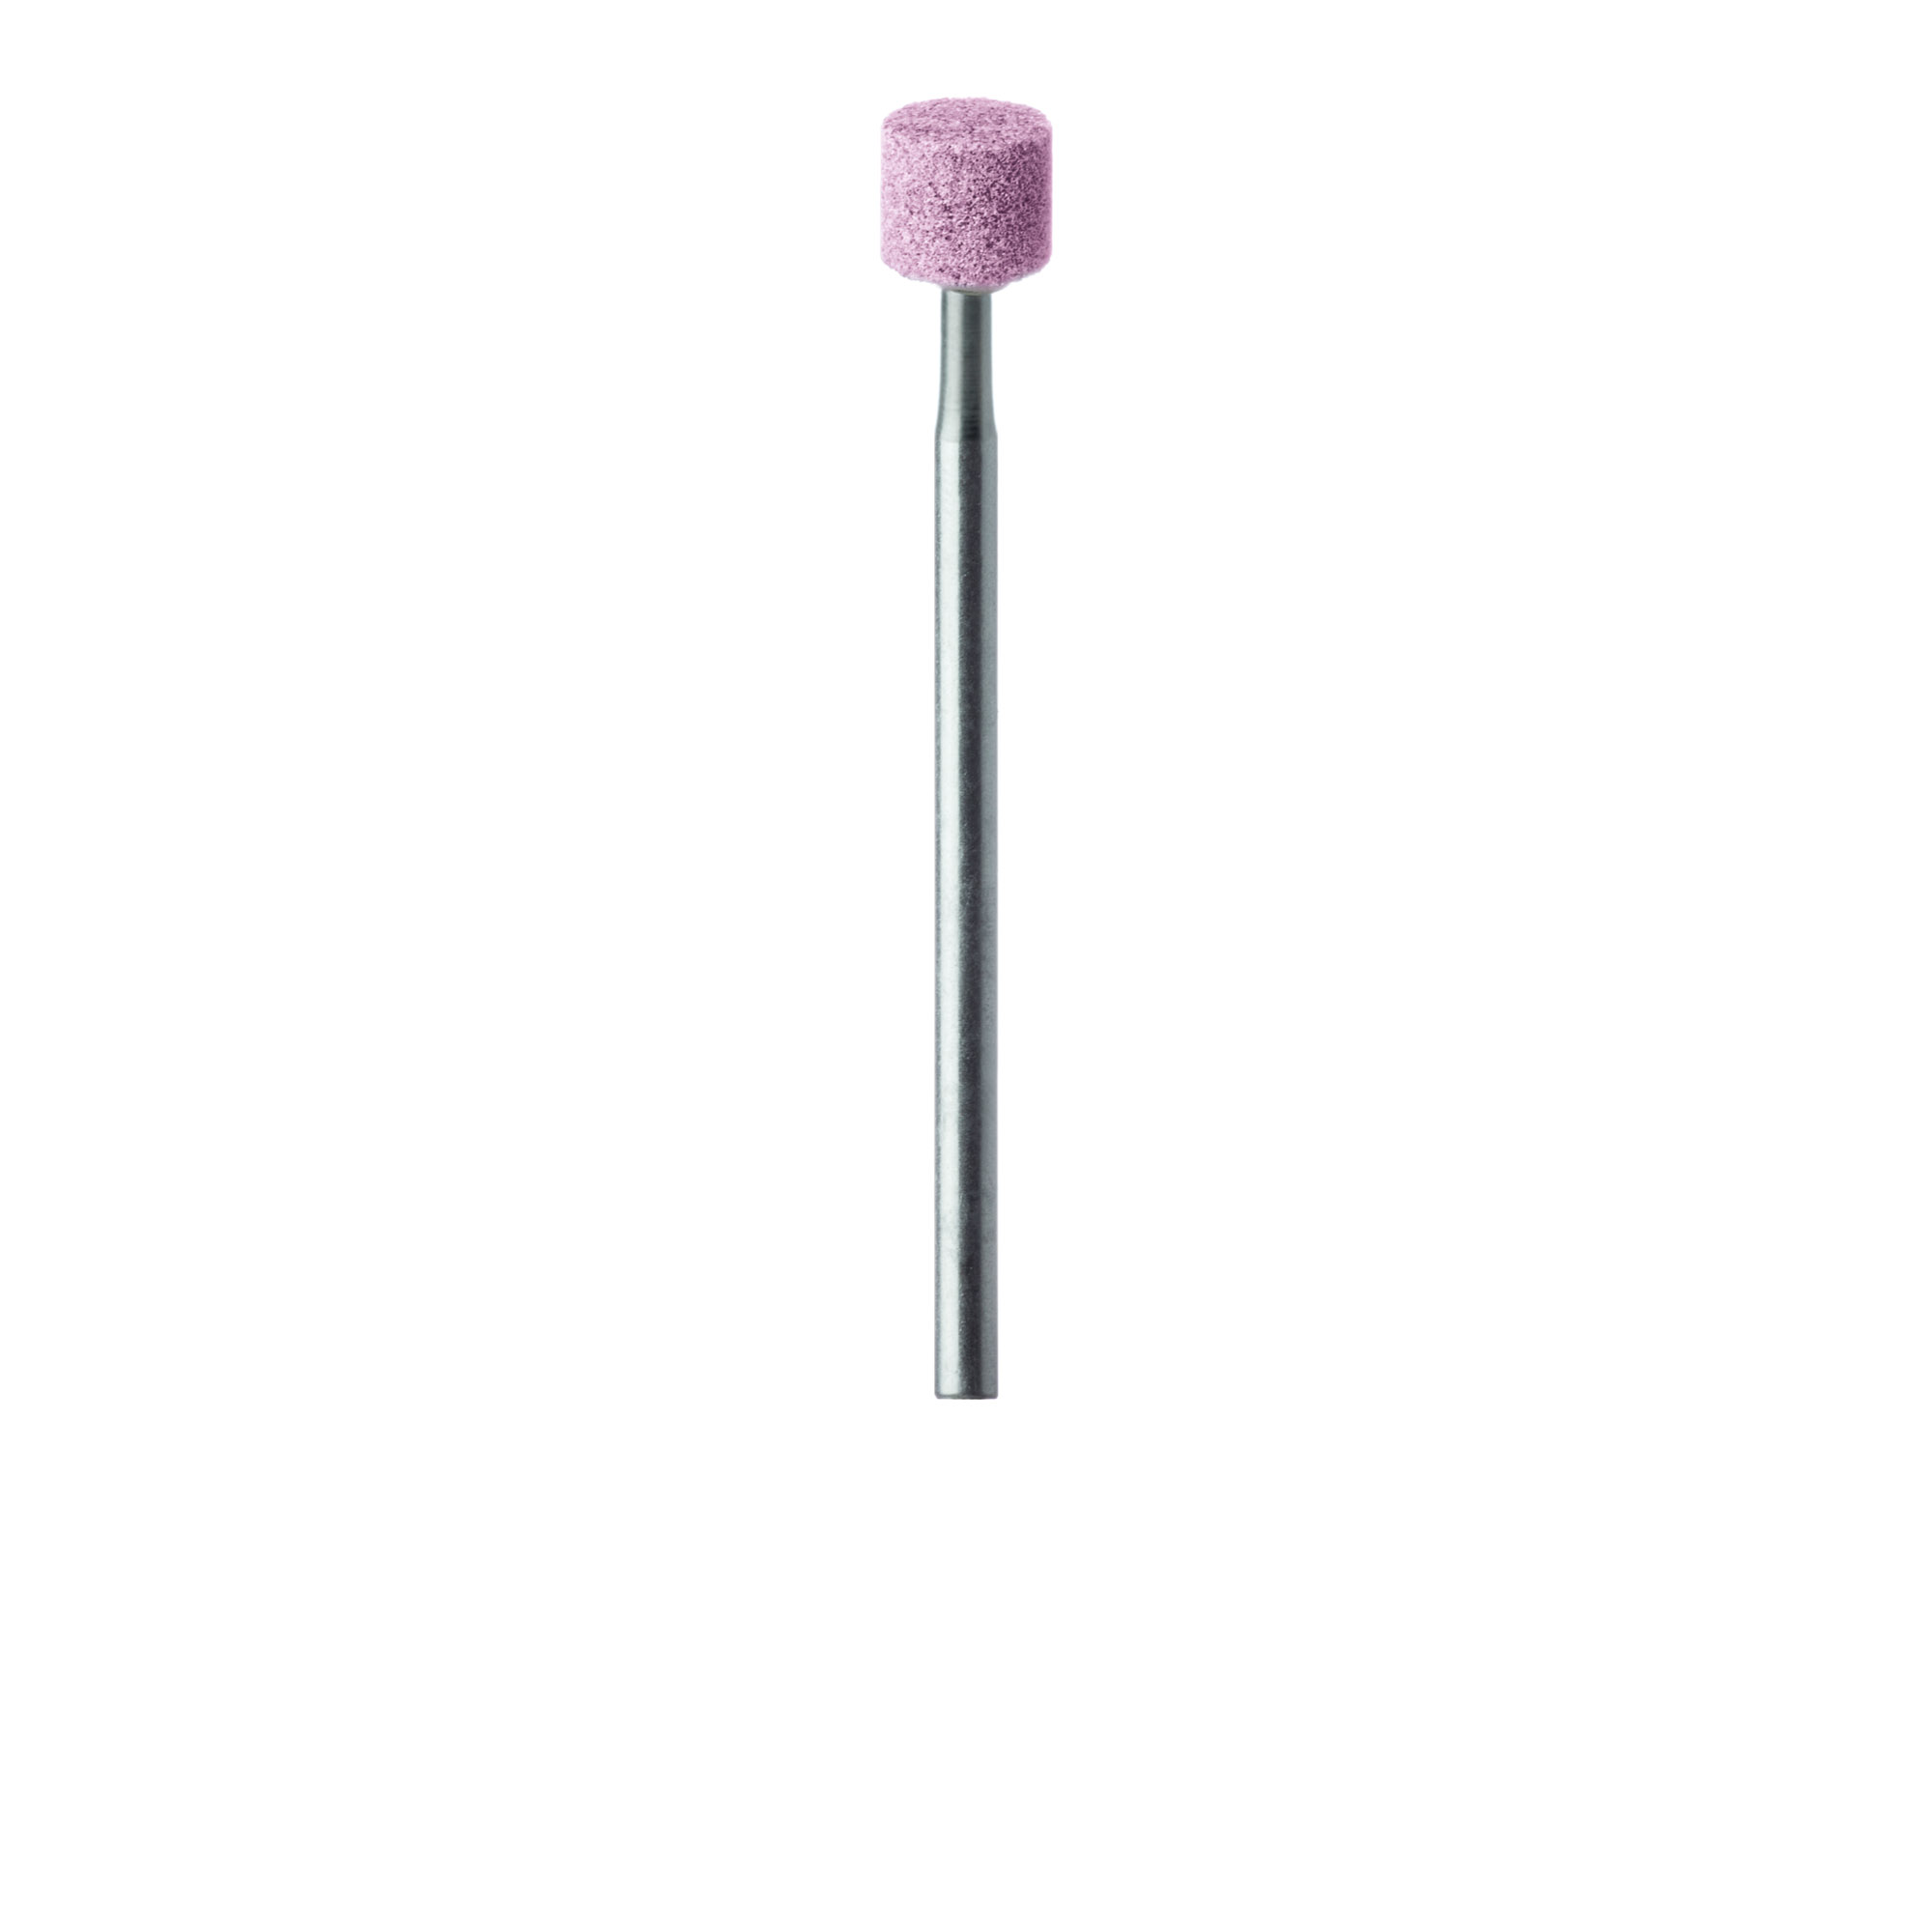 624-060-HP-P Abrasive, Pink, Cylinder, 6mm Ø, 5mm Length, HP